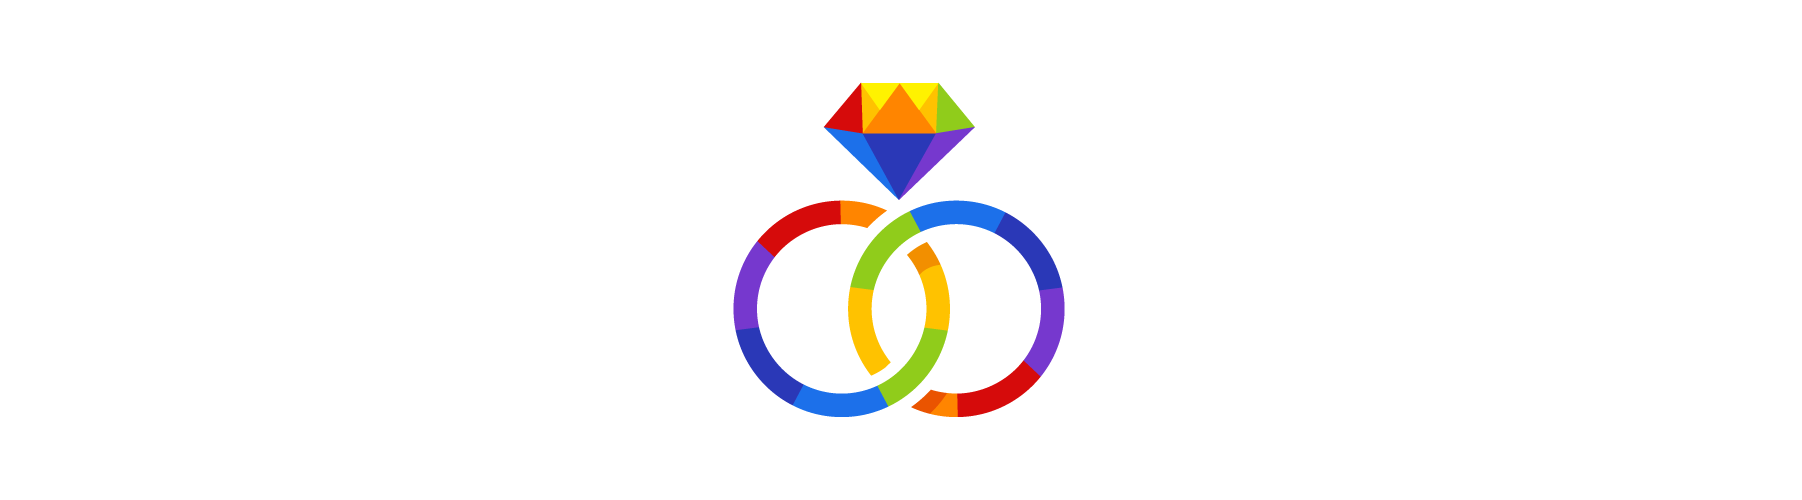 Rainbow rings section break representing LGBTQ marriage